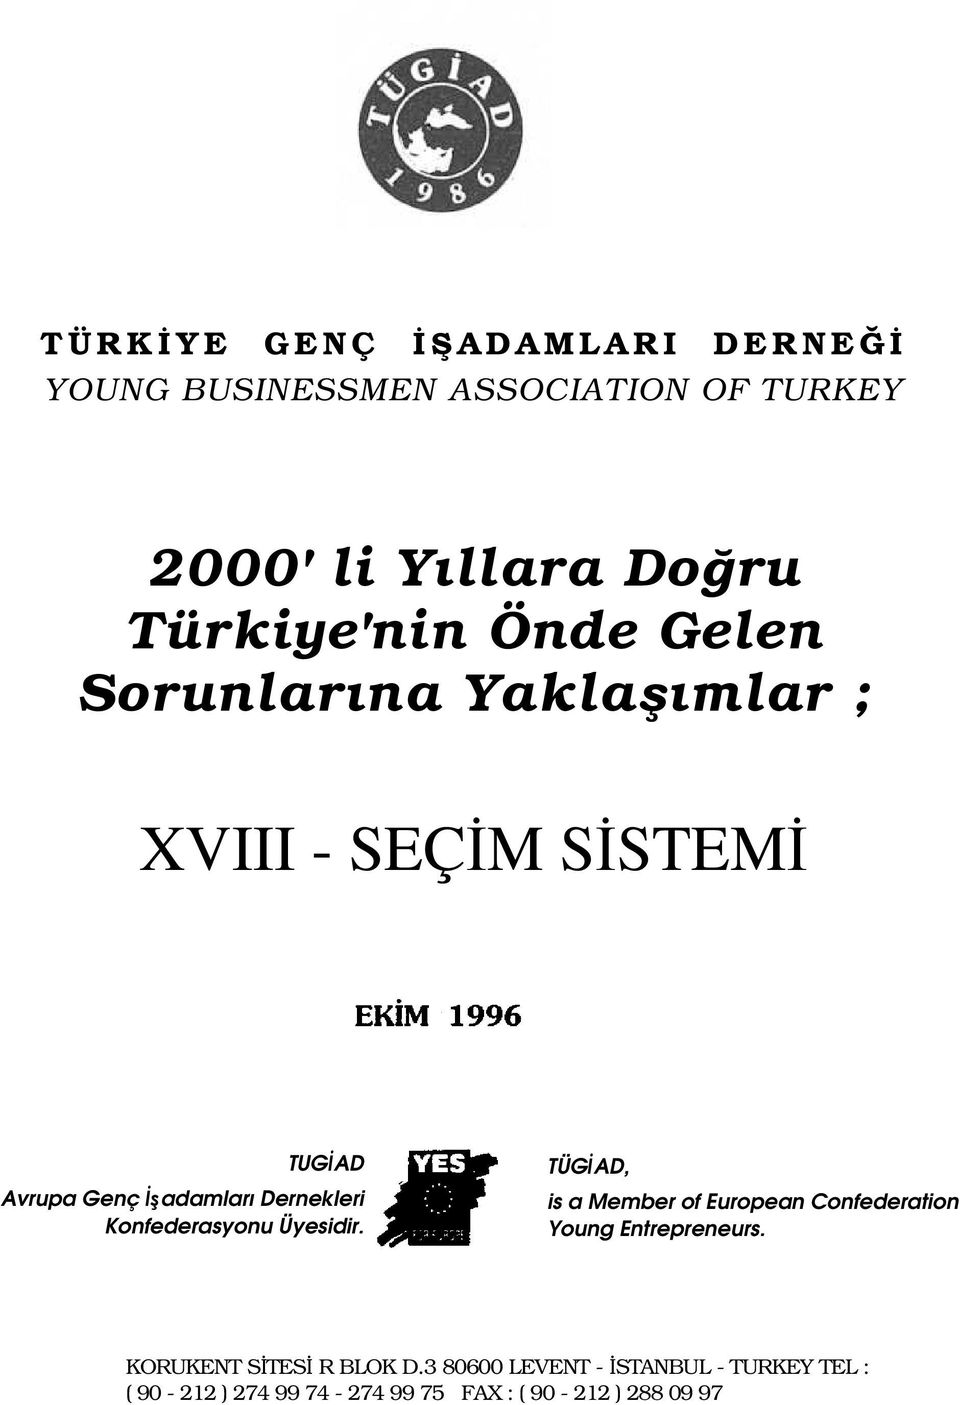 Dernekleri Konfederasyonu Üyesidir. TÜGİAD, is a Member of European Confederation of Young Entrepreneurs.